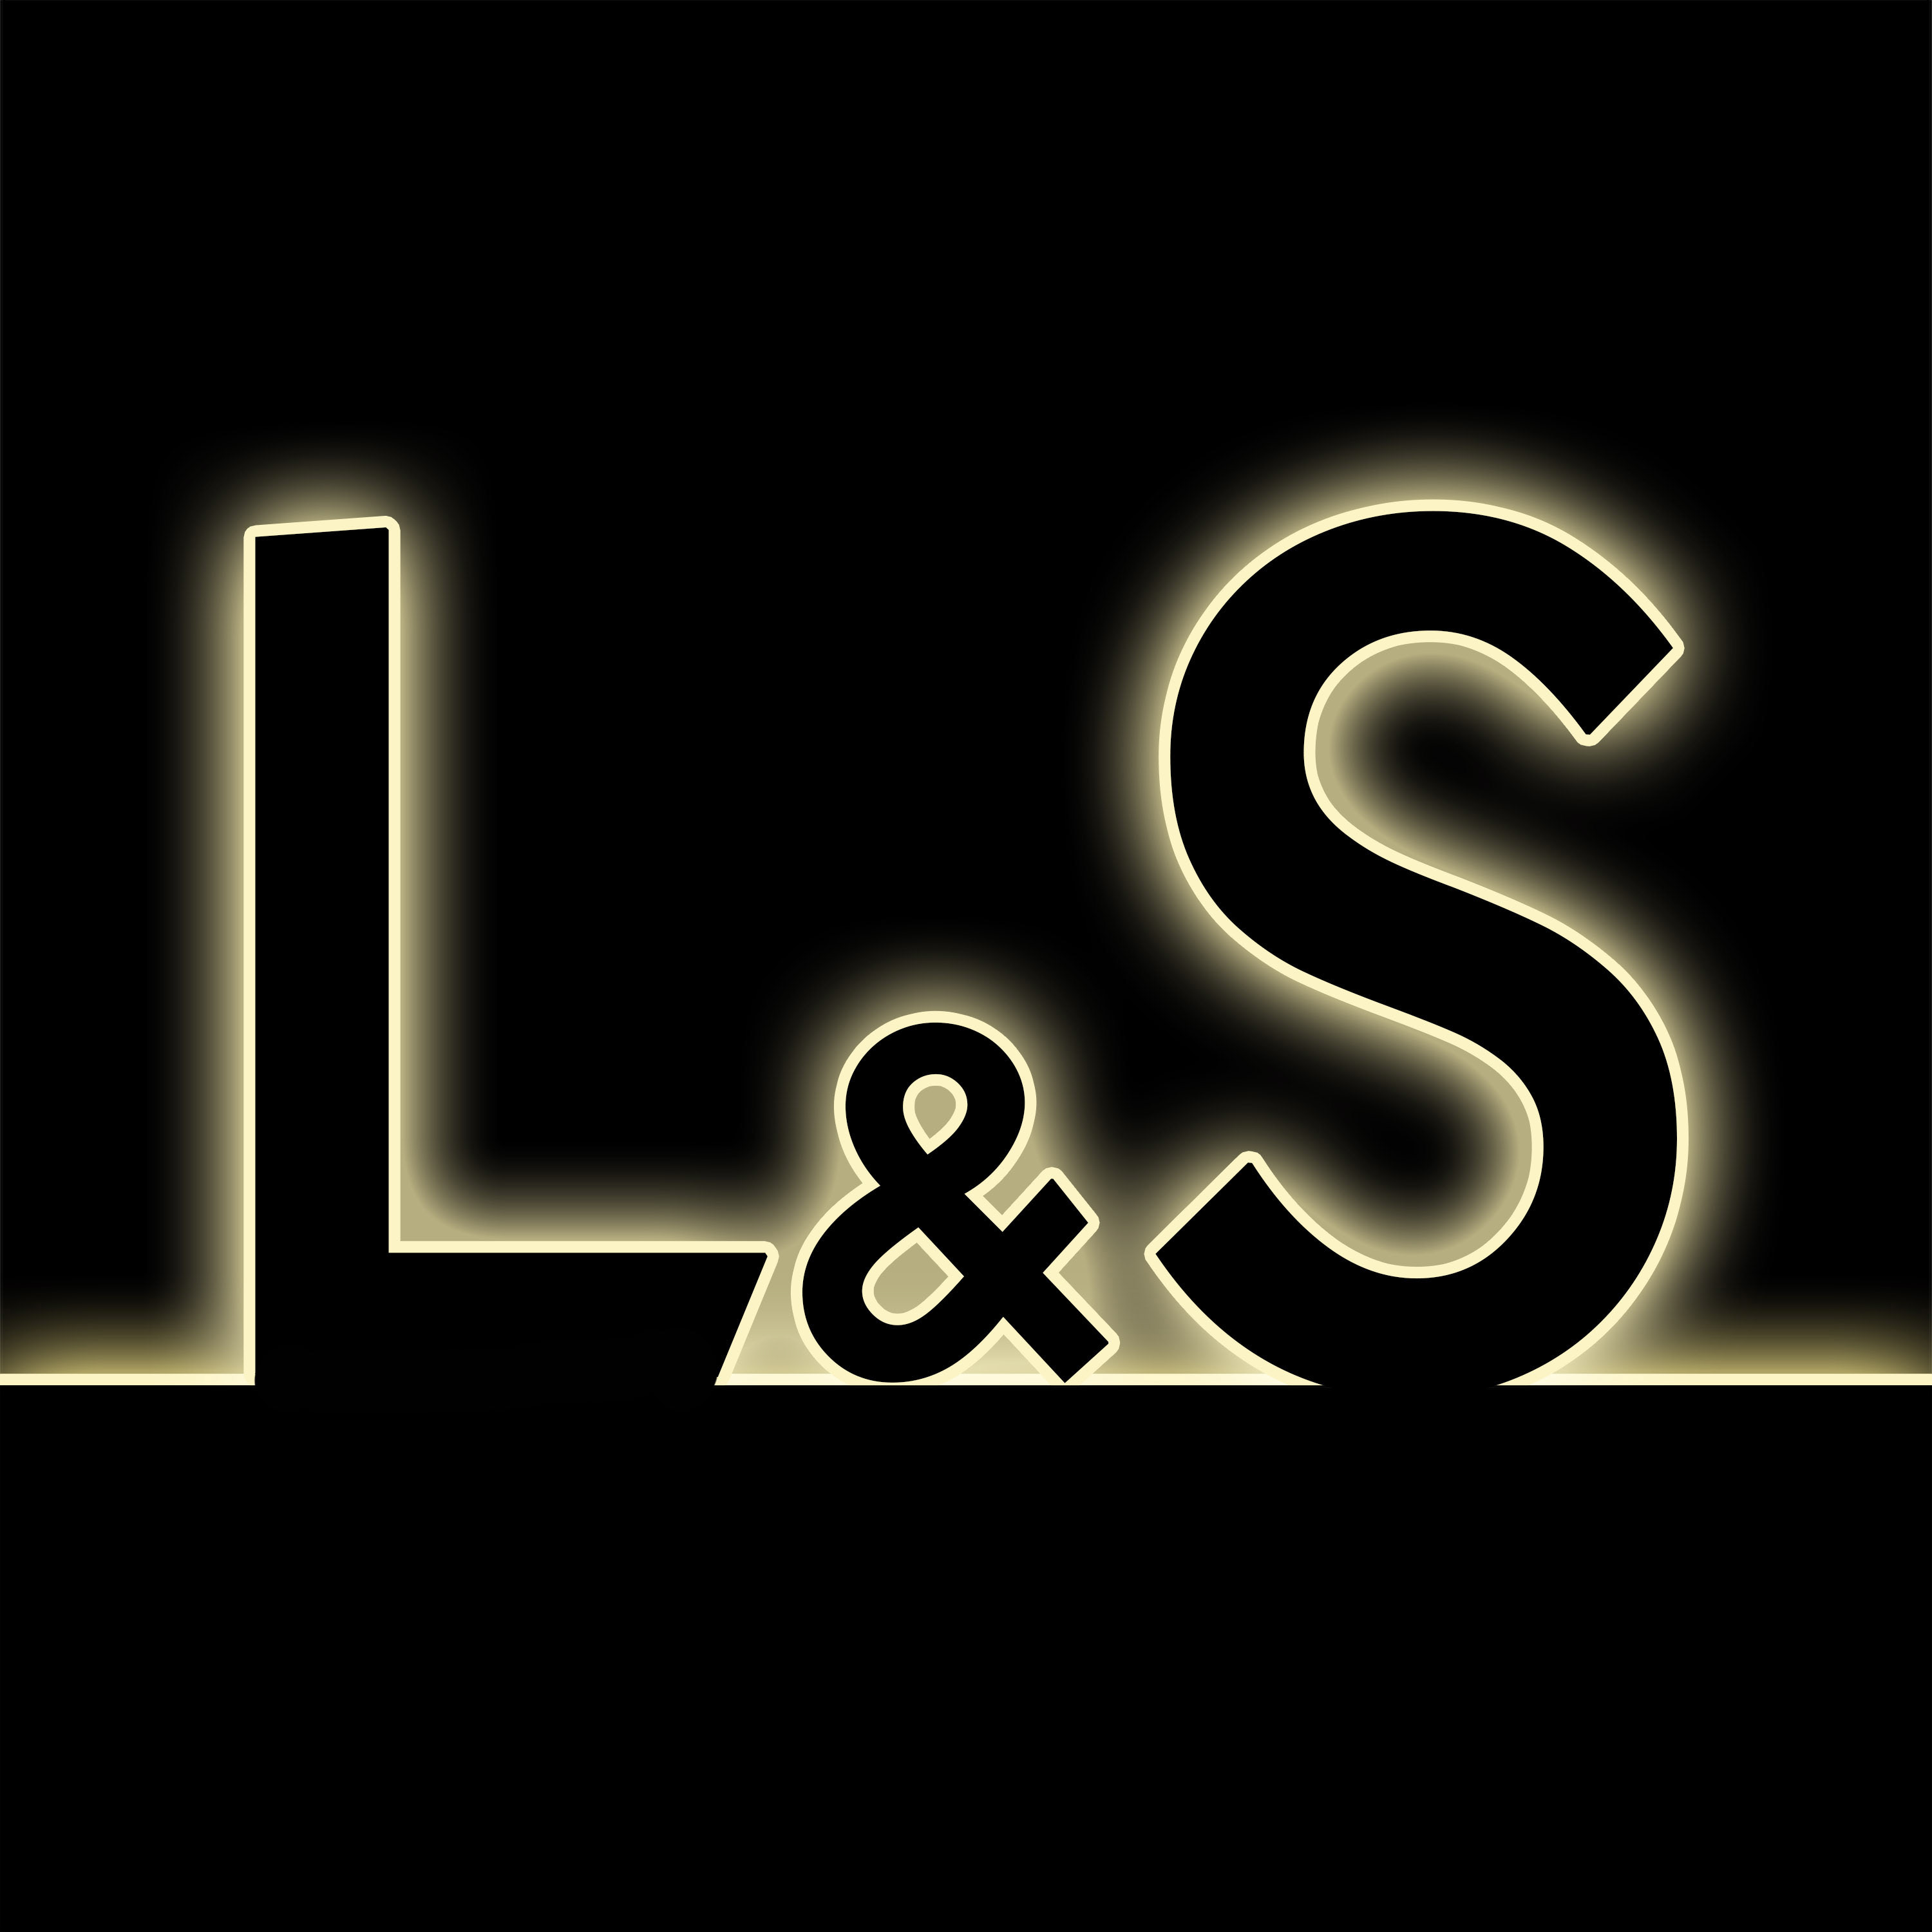 Lights & Silhouettes logo